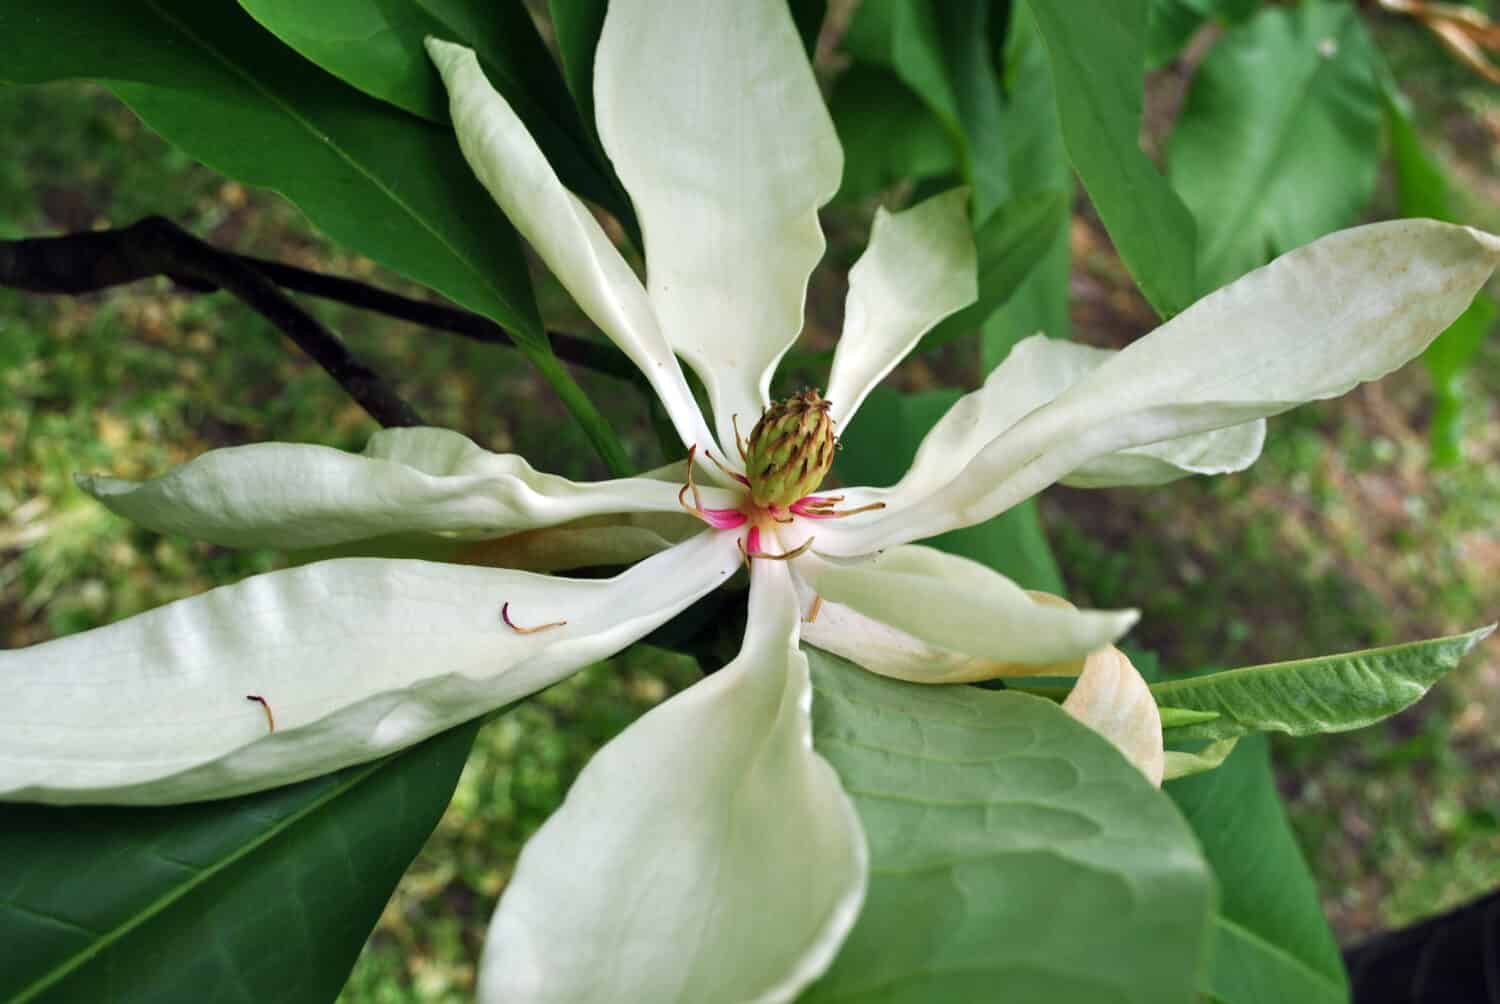 White magnolia tripetala (umbrella magnolia or umbrella-tree) open flower top view, close up detail, soft dark green blurry leaves background